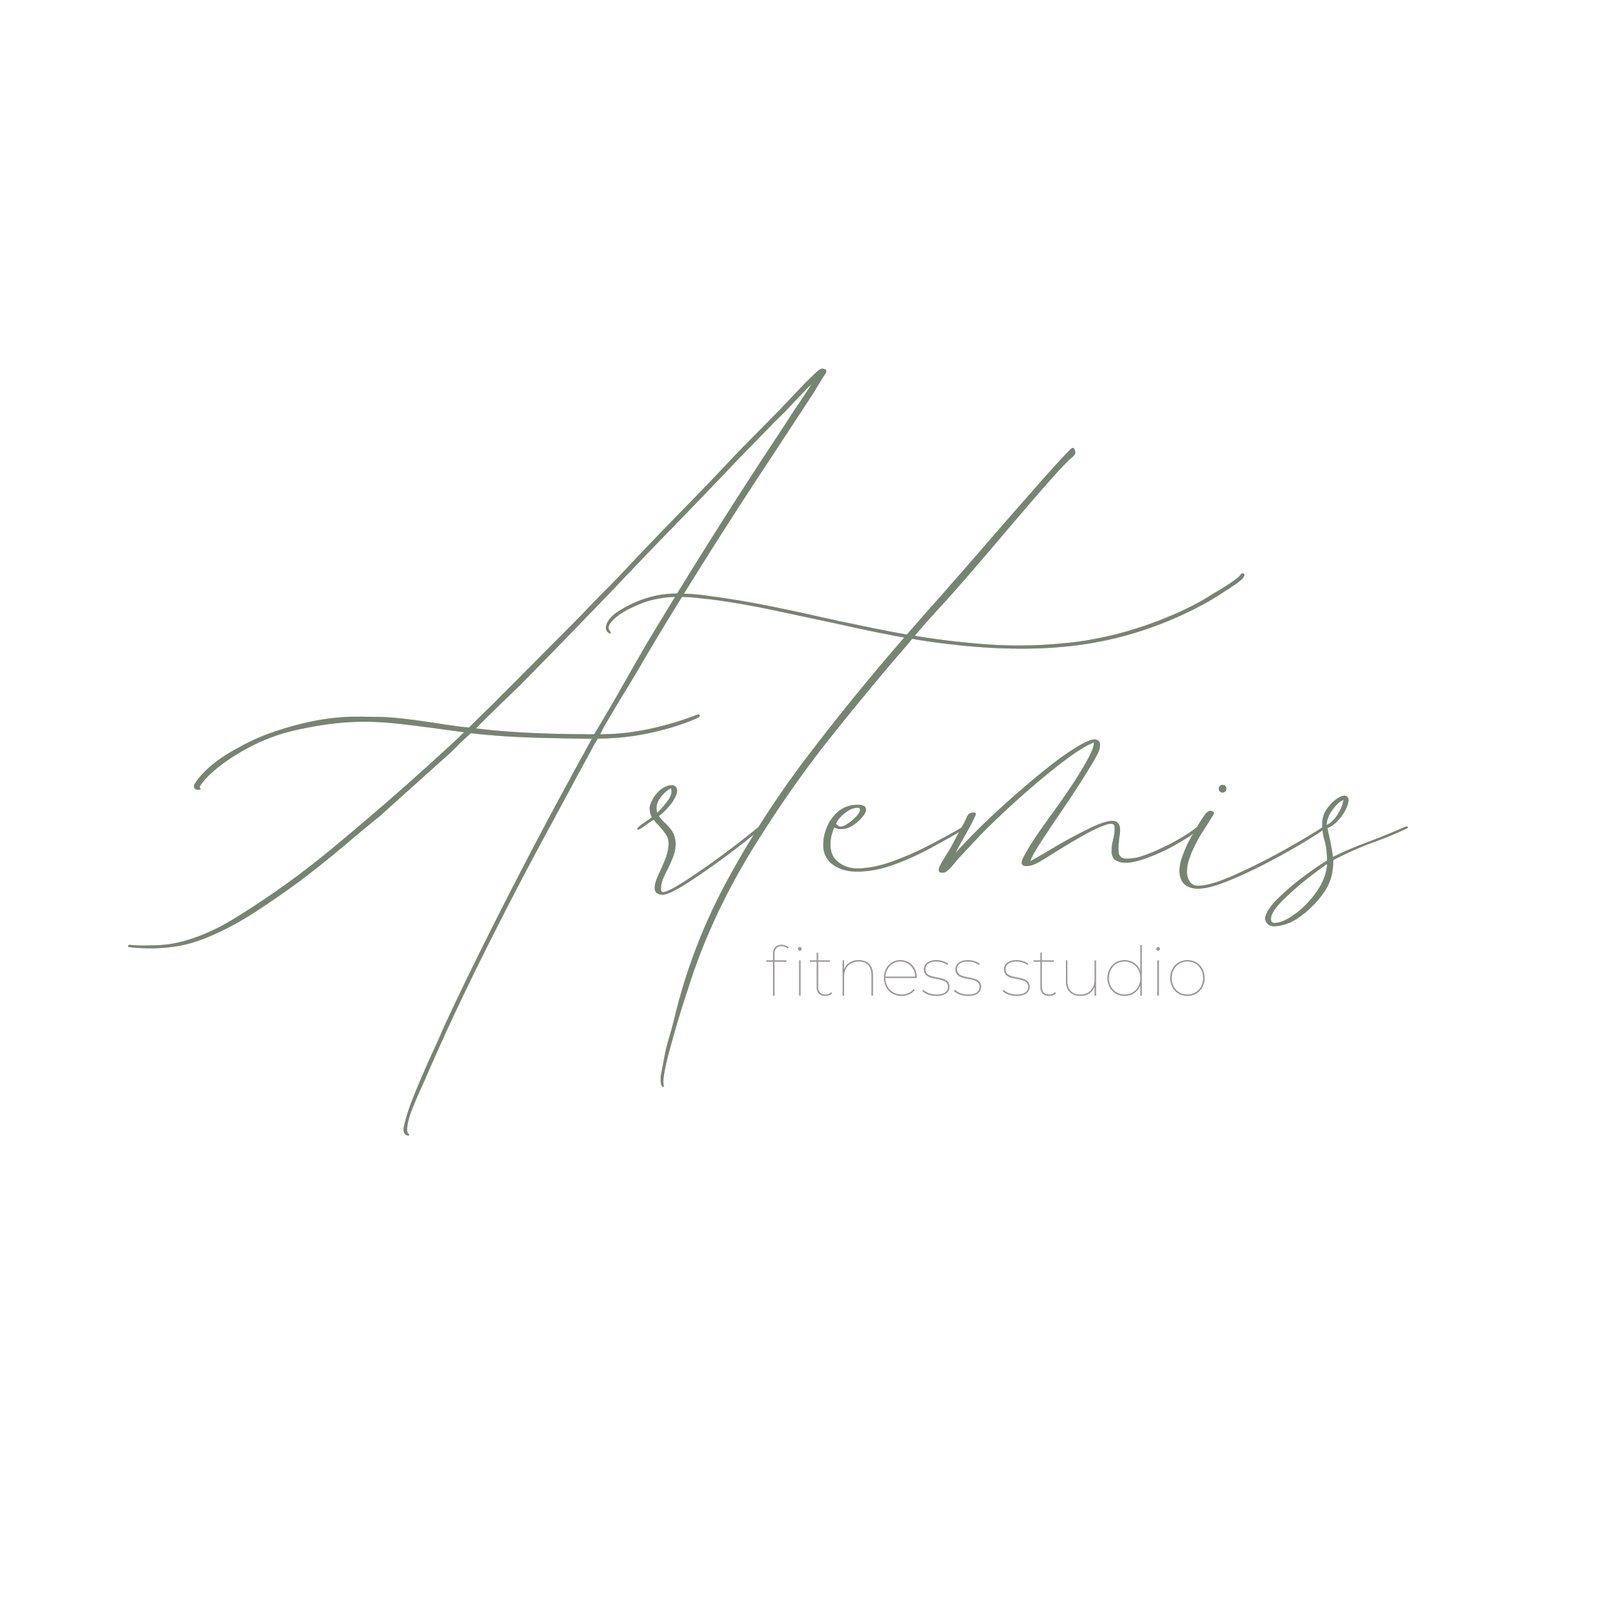 Artemis Fitness Studio logo